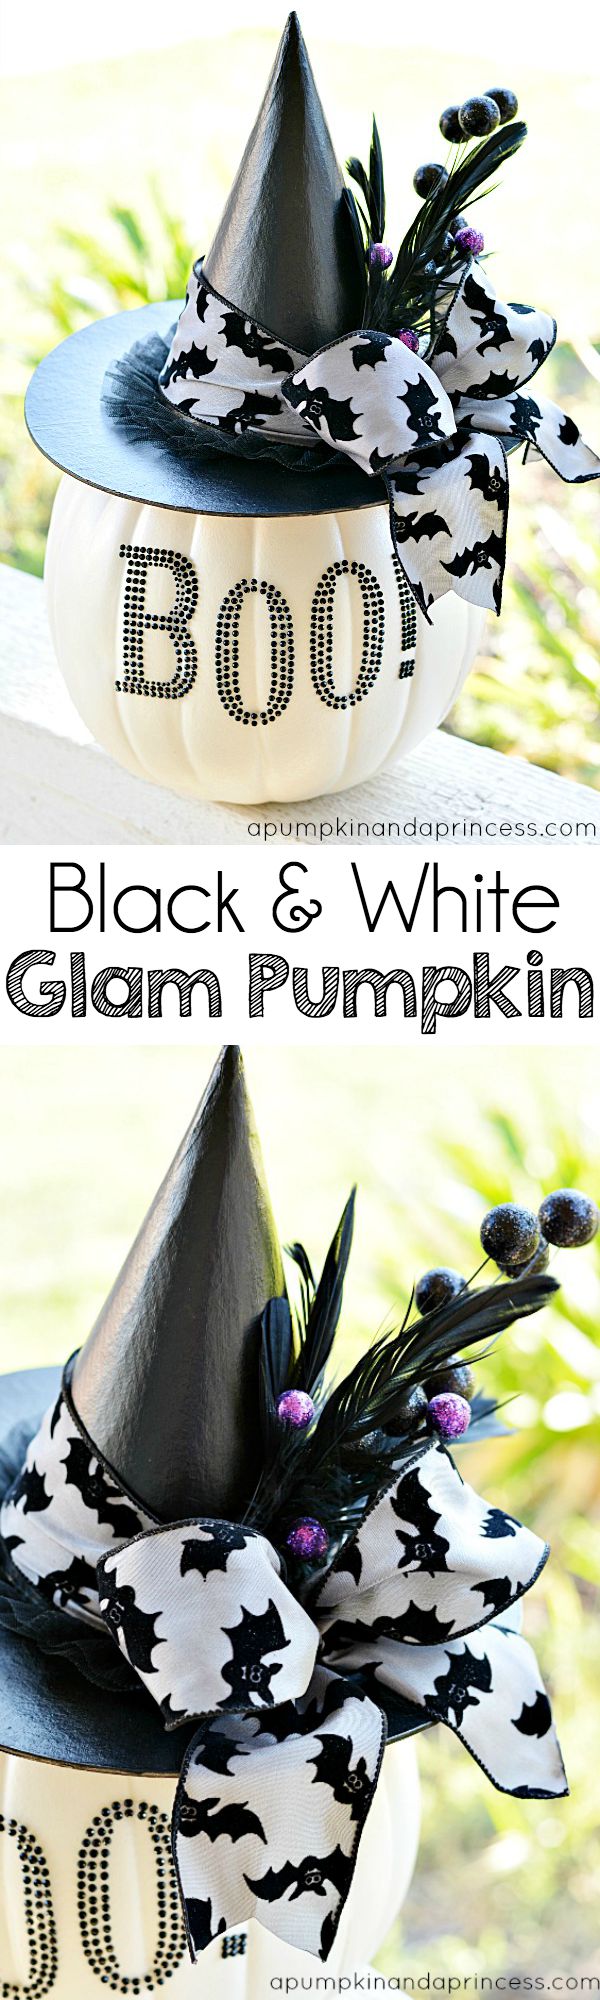 Black and White Glam Pumpkin